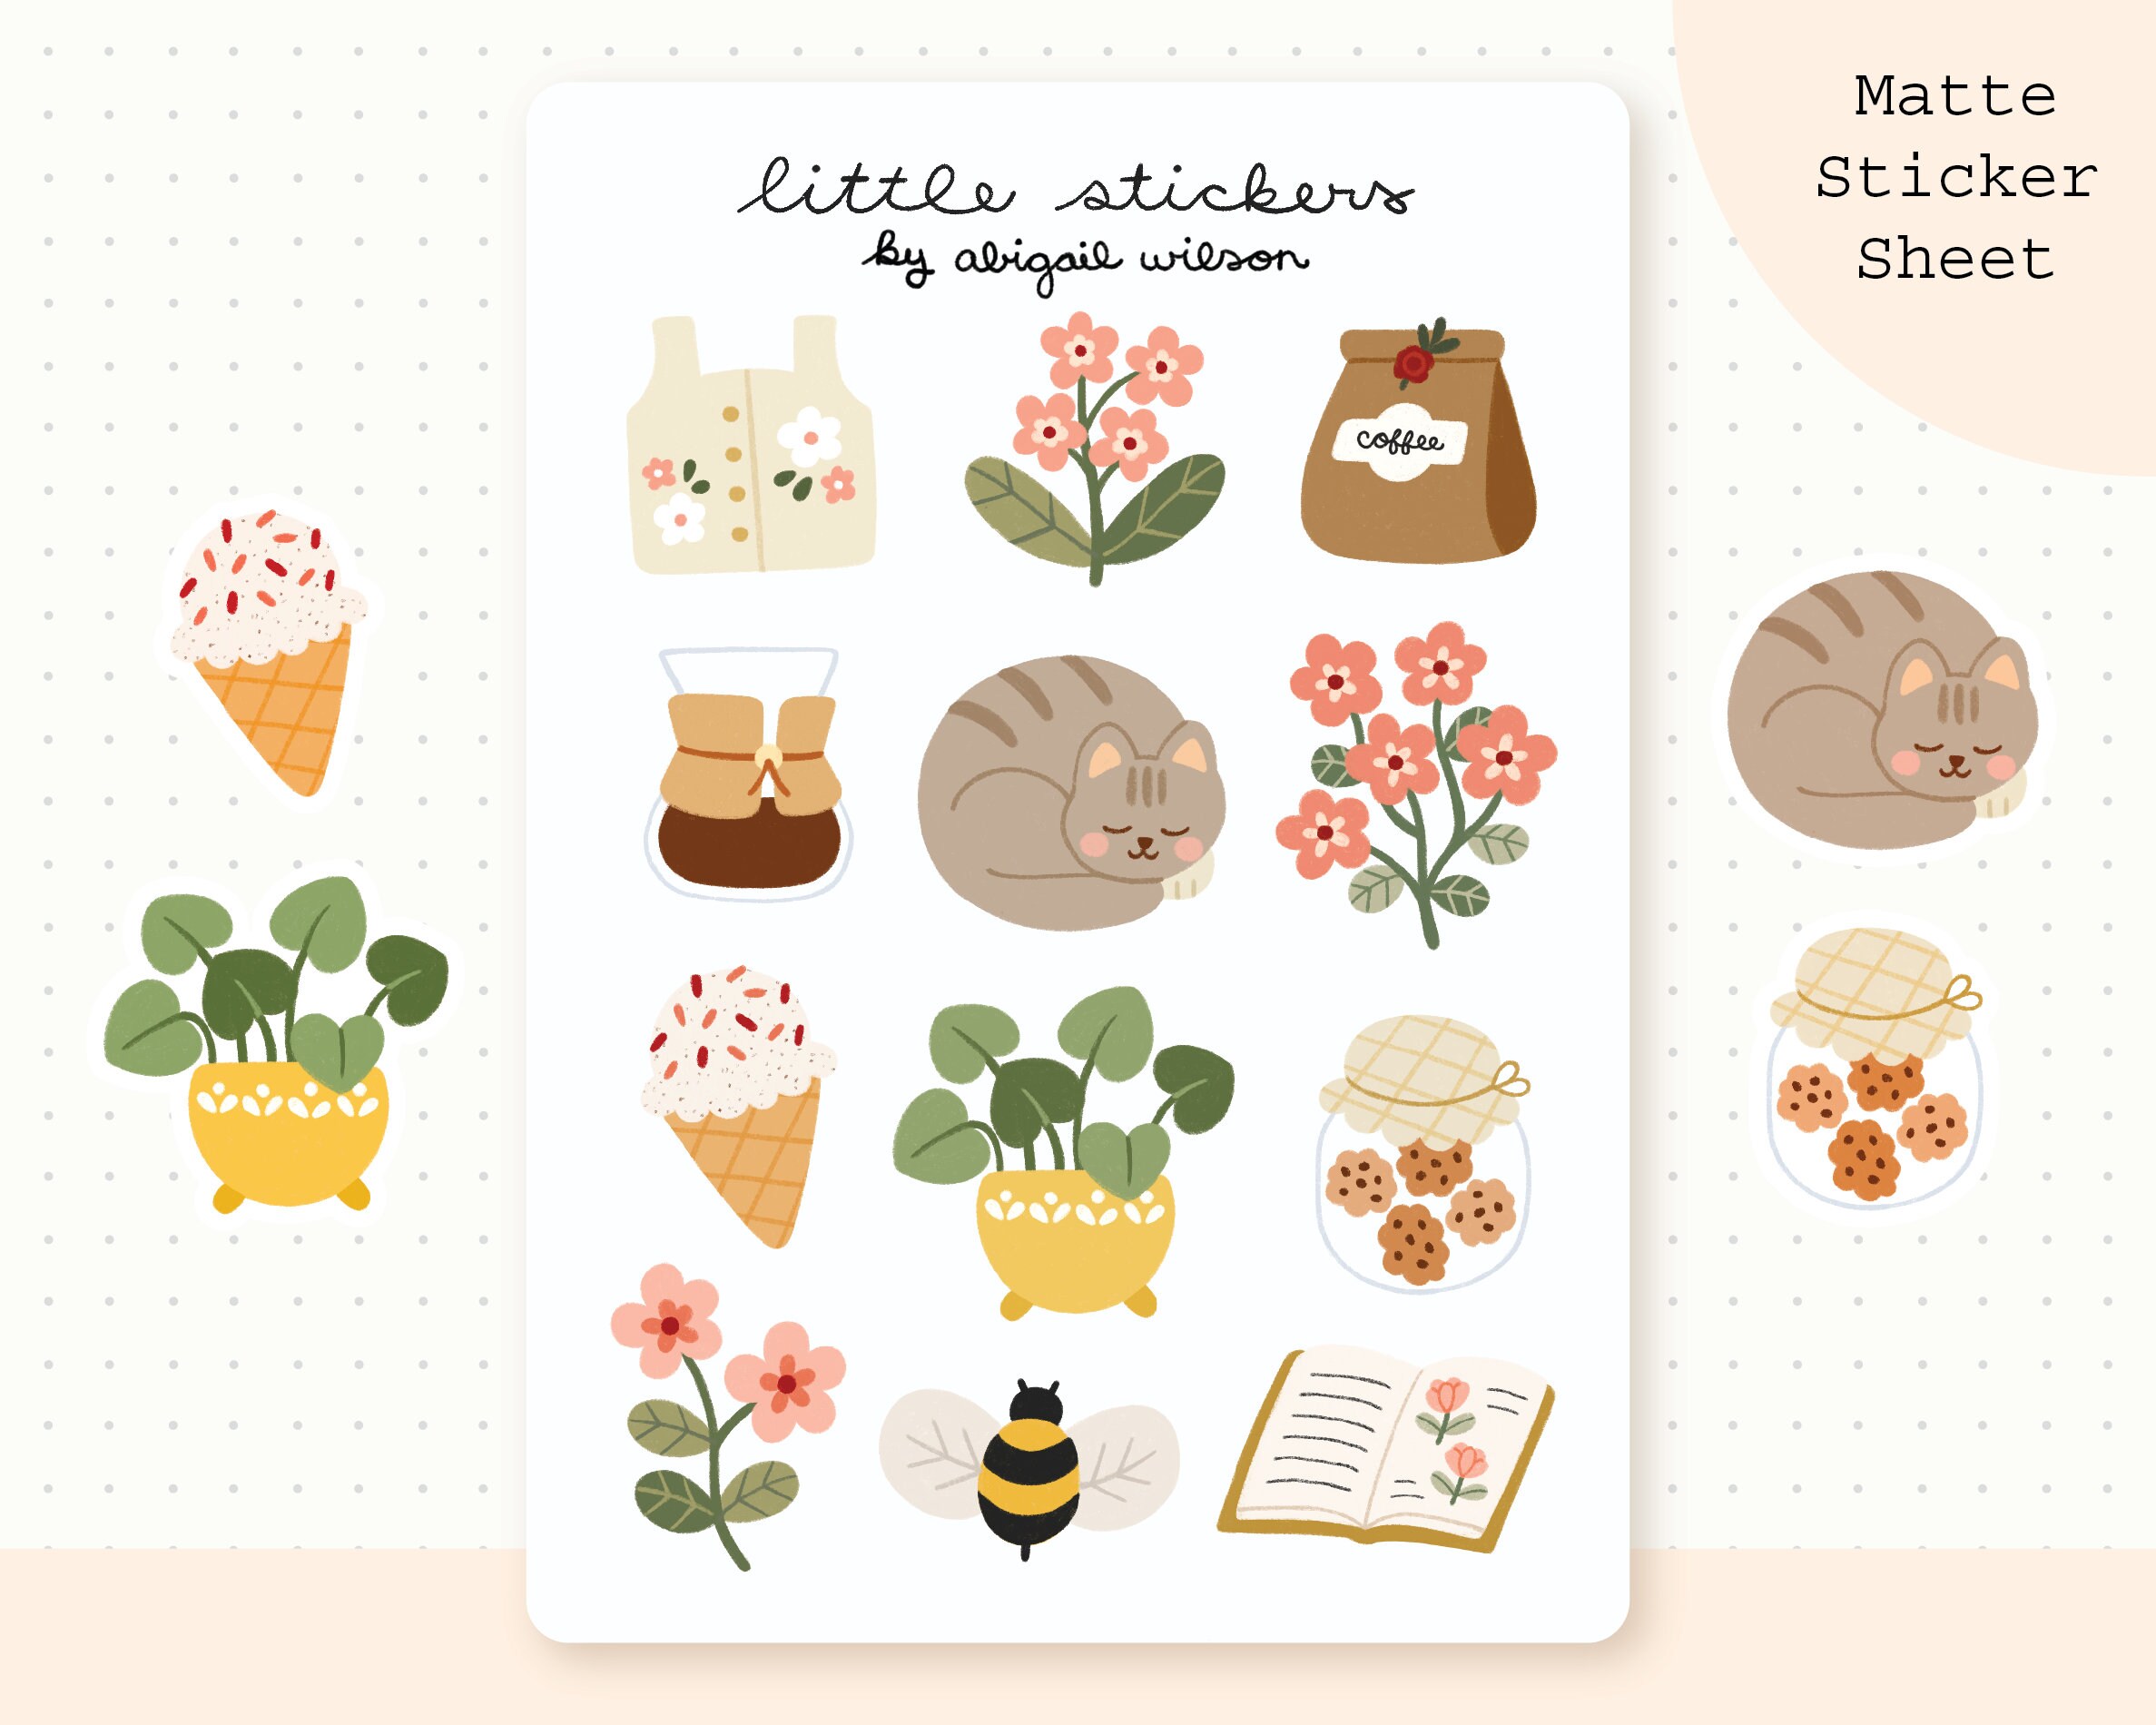 Cottagecore Sticker Sheet | Planner Stickers | Bullet Journal Stickers |  Cottage Stickers | Garden Stickers | Scrapbooking Stickers | Kawaii